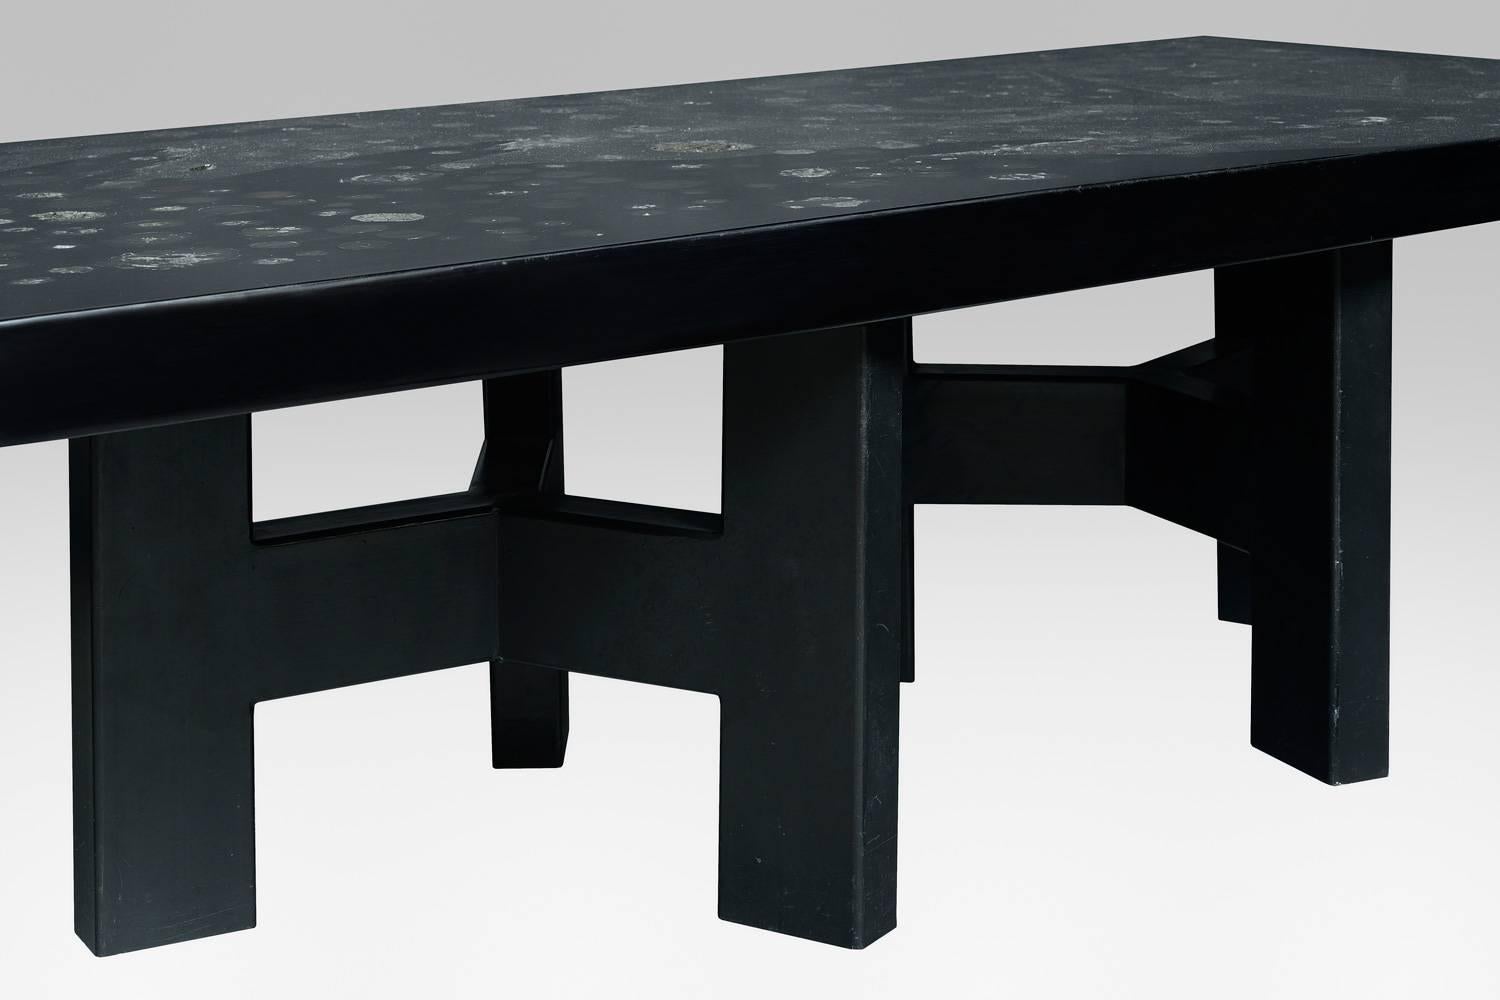 Ado Chale (born in 1928 Belgium).

Exceptional coffee table.

Marcasite and black lacquer.
Double tripod base.
Unique piece.

Measures: 36 x 130 x 60 cm.

We enclose the 